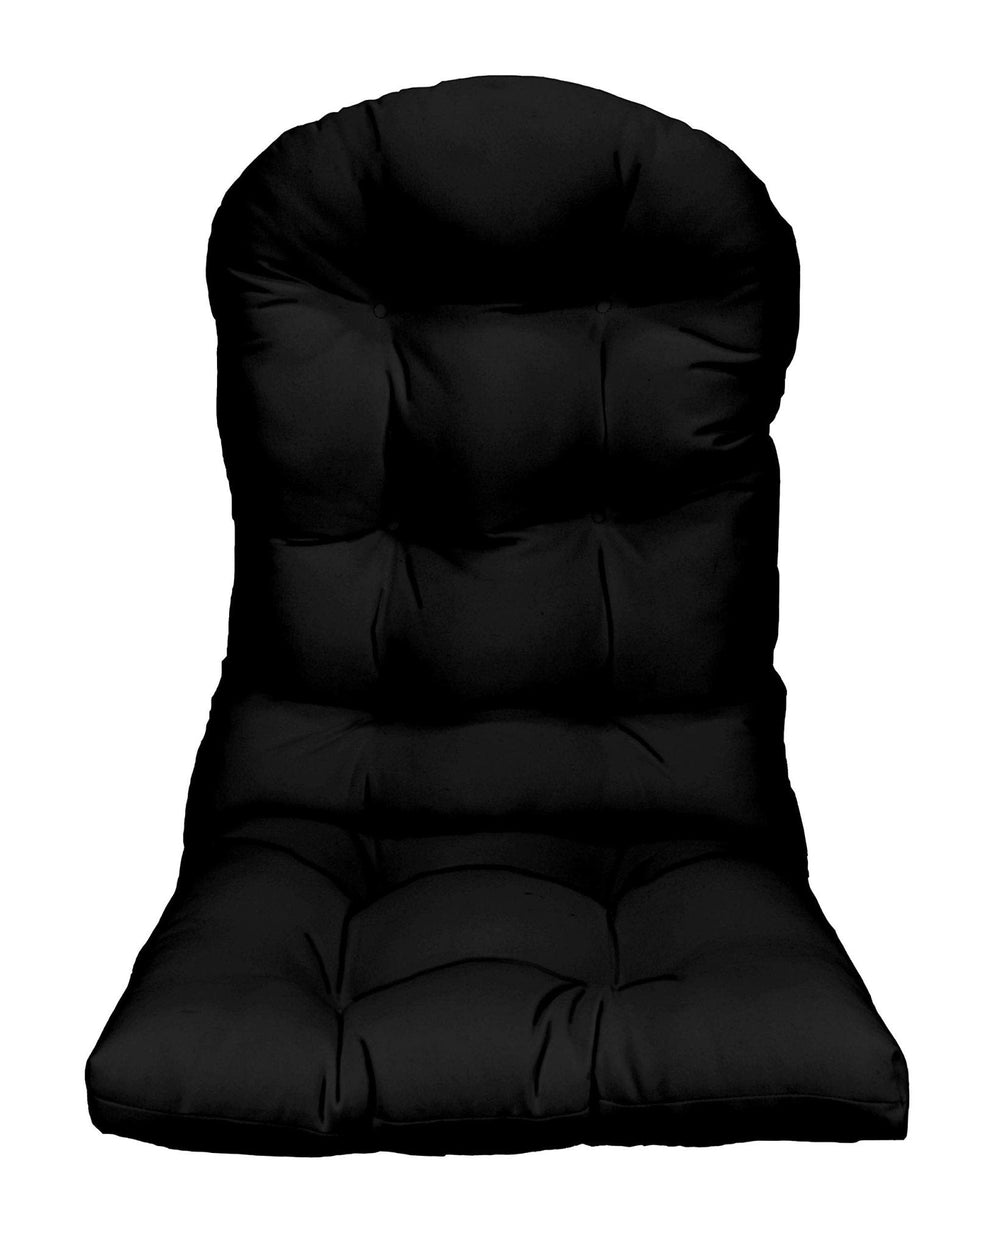 Tufted Adirondack Patio Chair Seat Cushion | 42.5” H x 21” W | SPRING FLASH SALE - RSH Decor